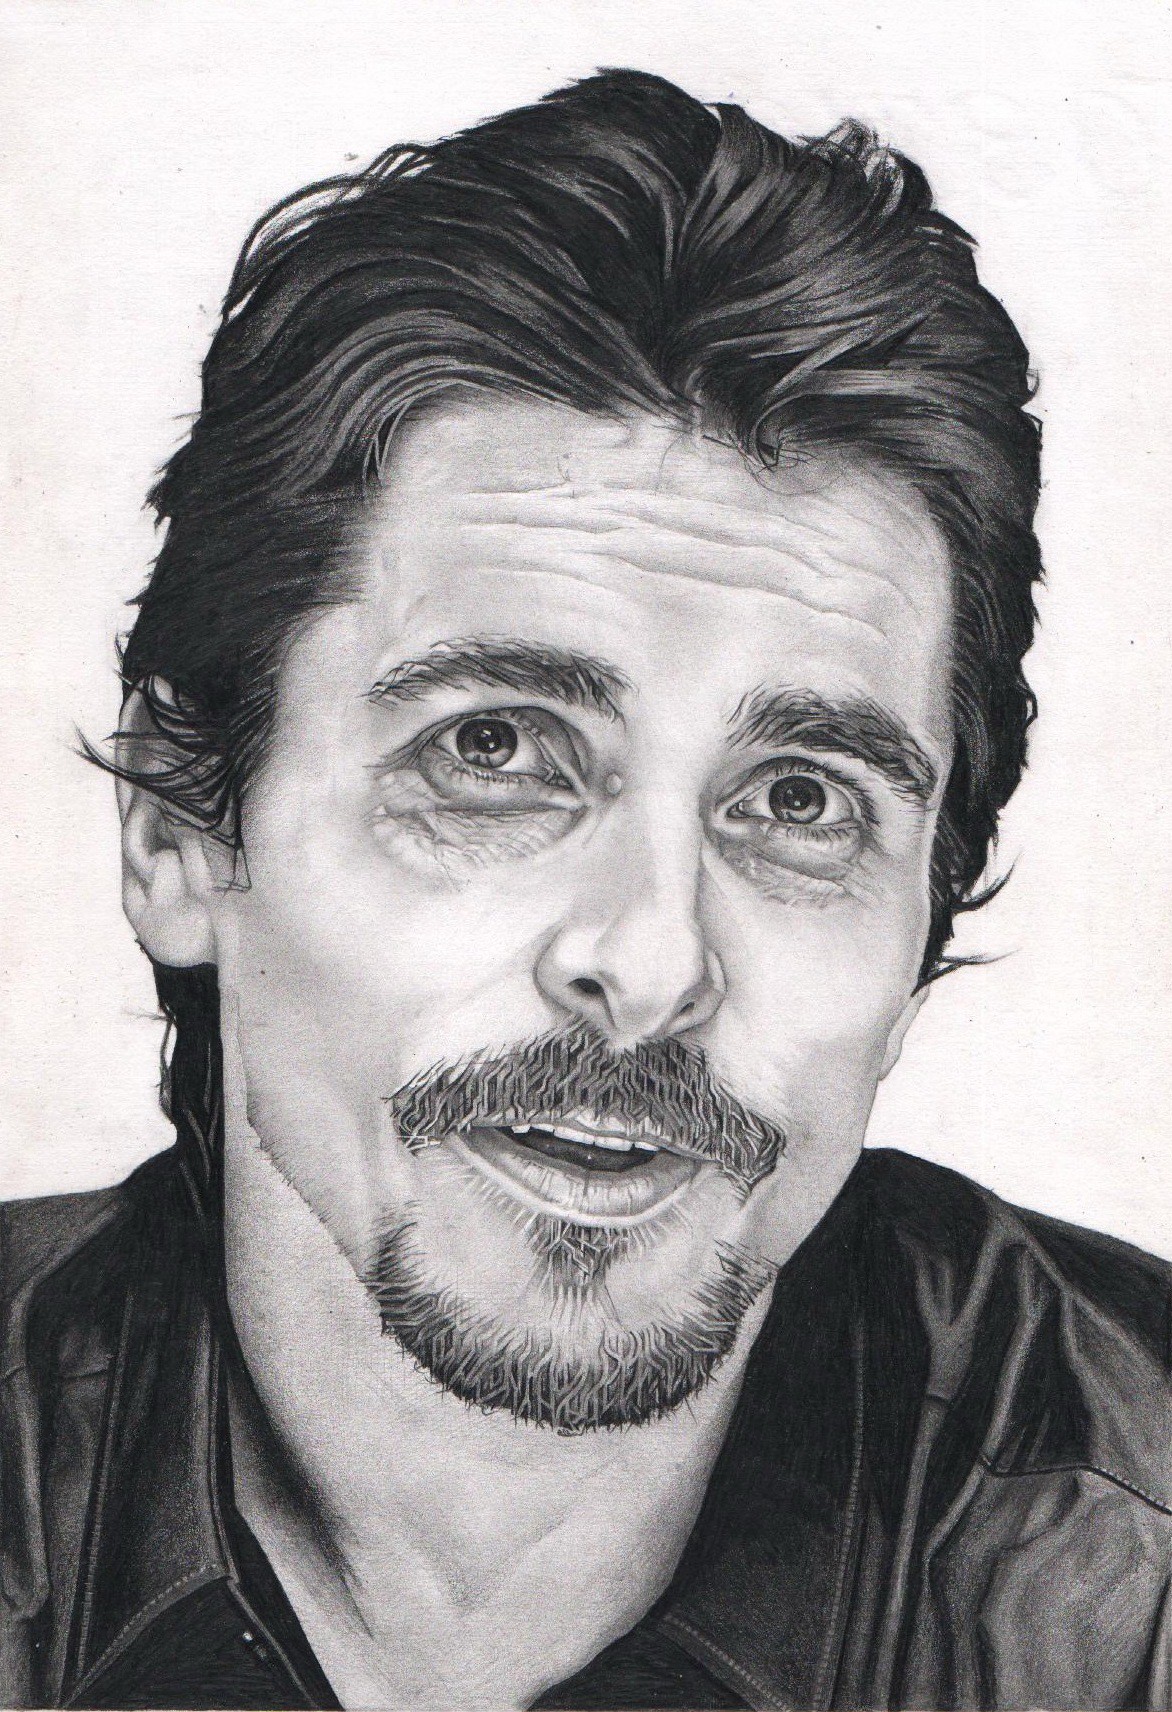 Christian Bale Drawing Image - Drawing Skill